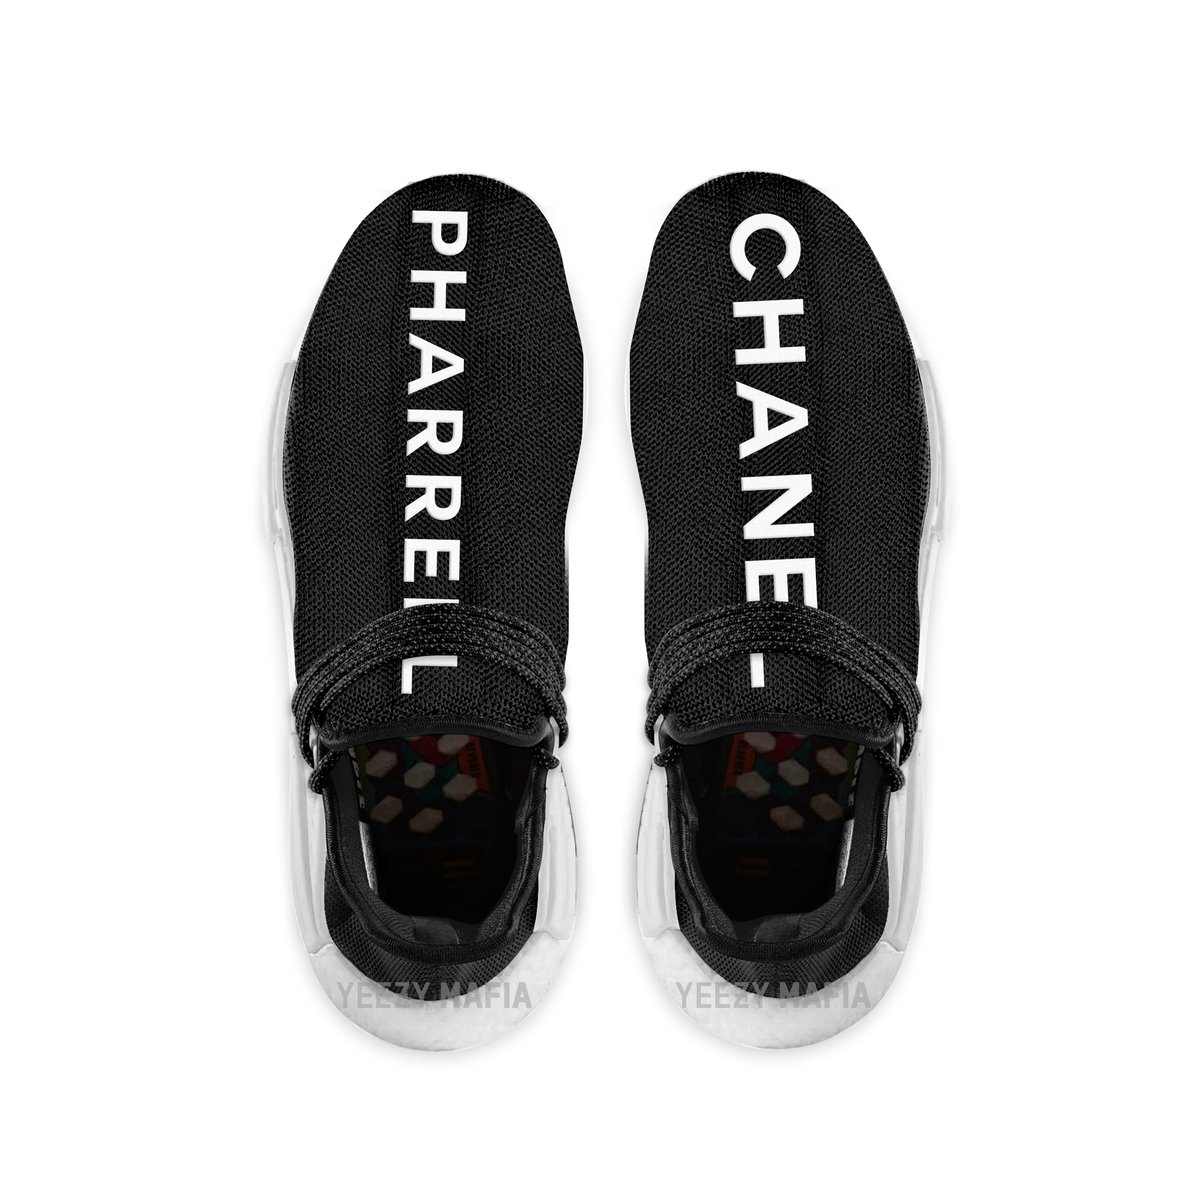 Pharrell x CHANEL x adidas NMD HUMAN RACE